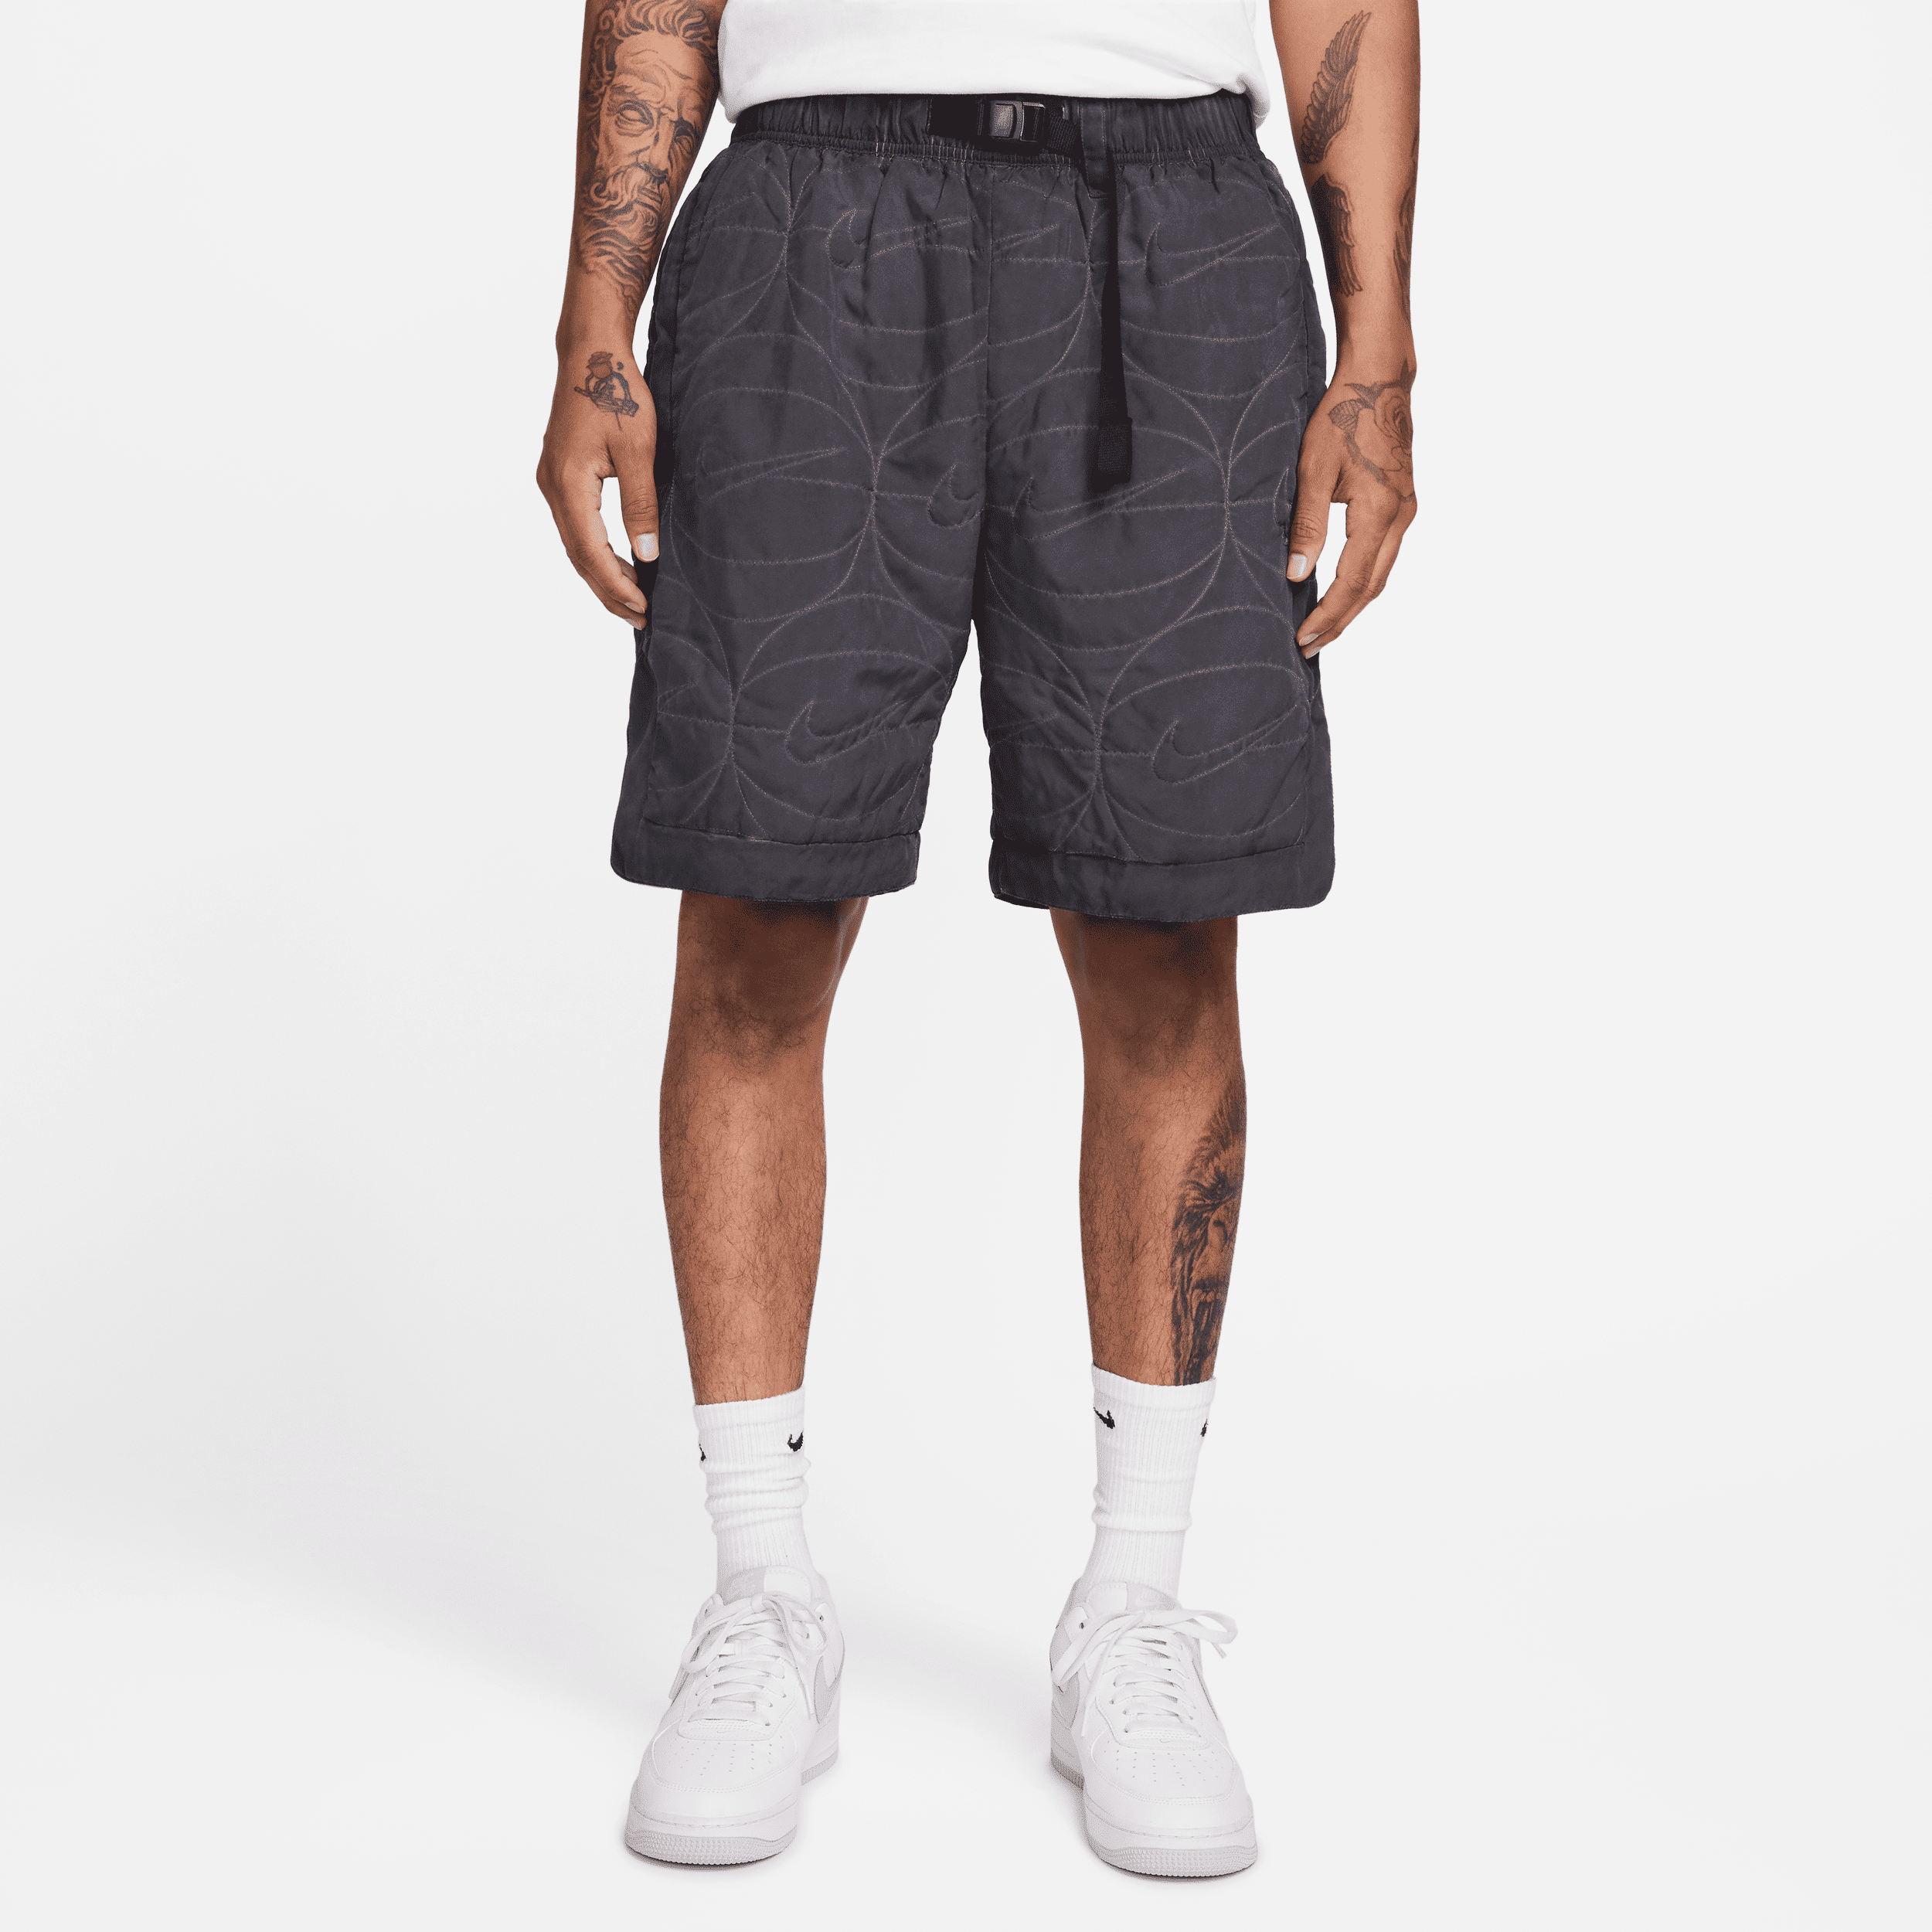 nike shorts da basket in tessuto con imbottitura sintetica 20 cm  – uomo - nero